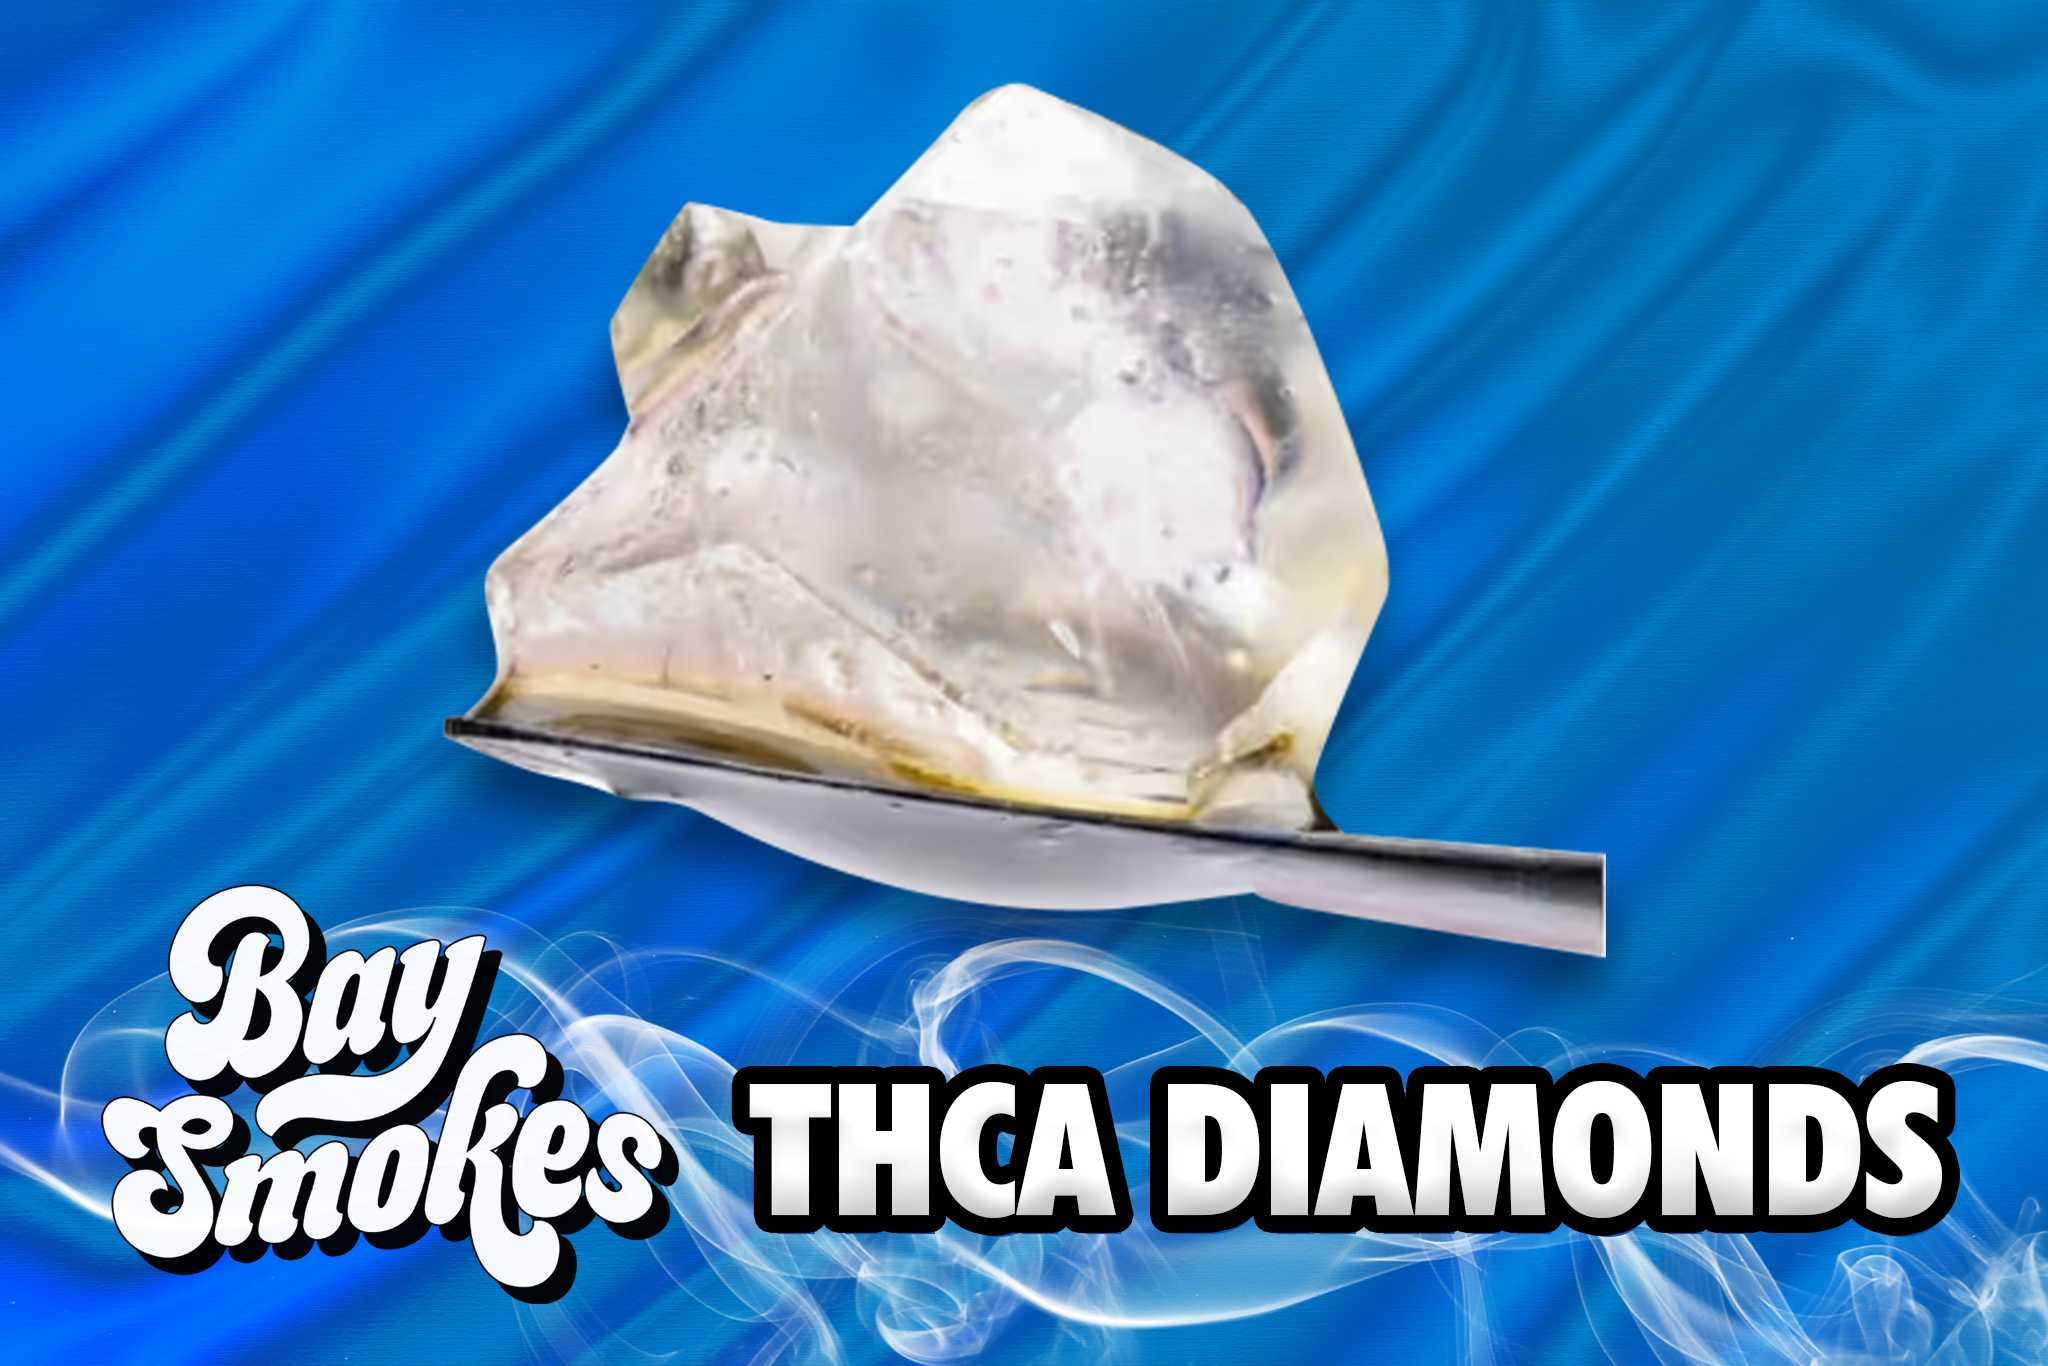 THCA Diamonds